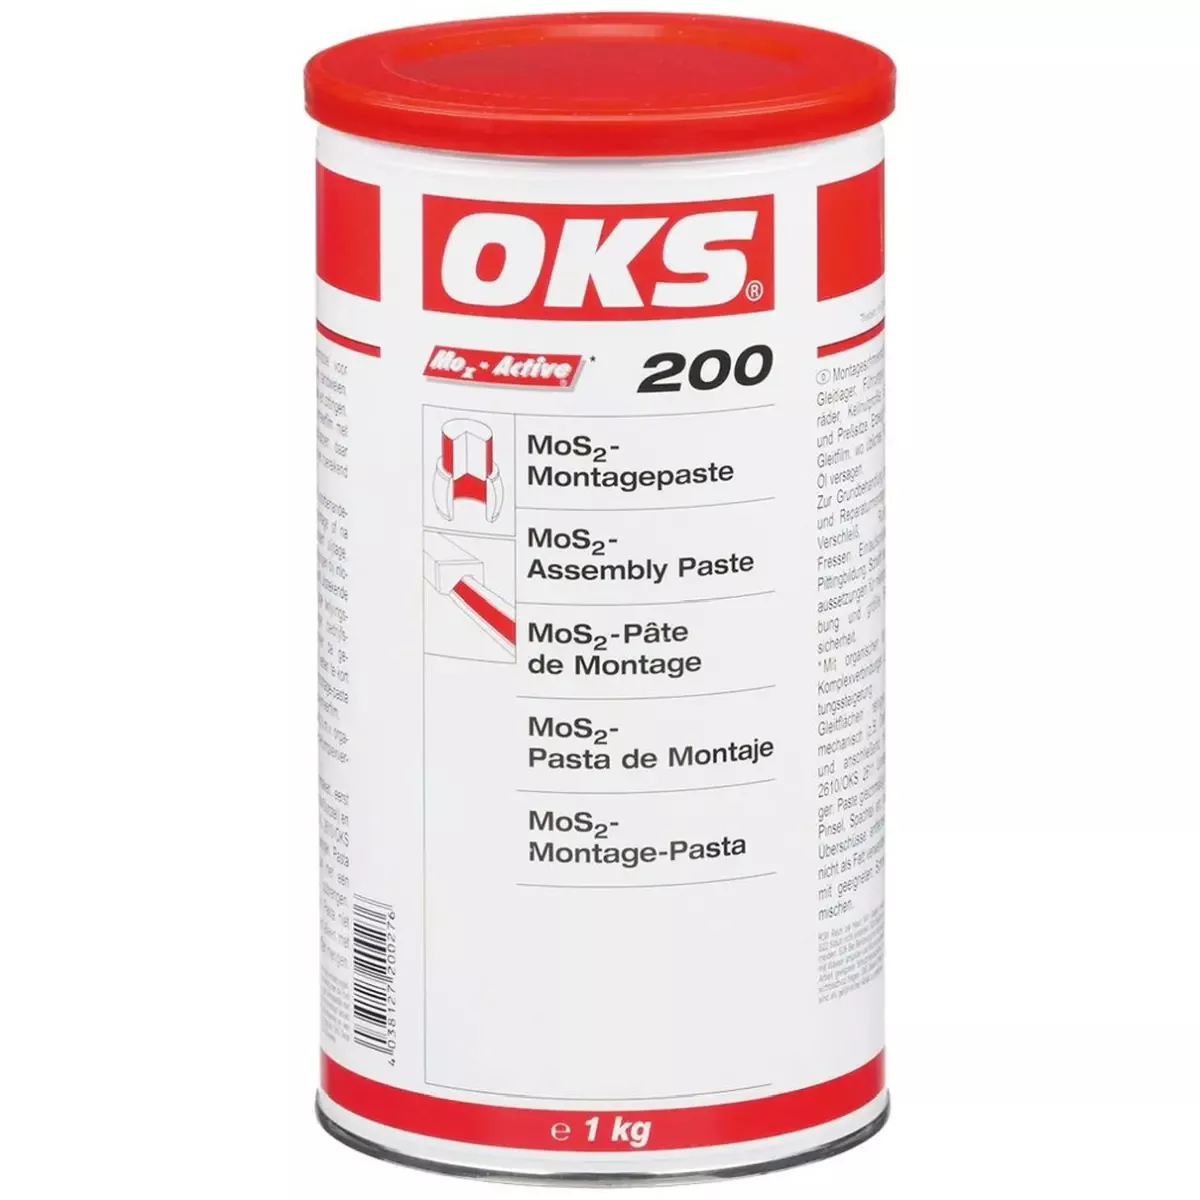 MoS2-Montagepaste OKS 200, 1 kg Dose